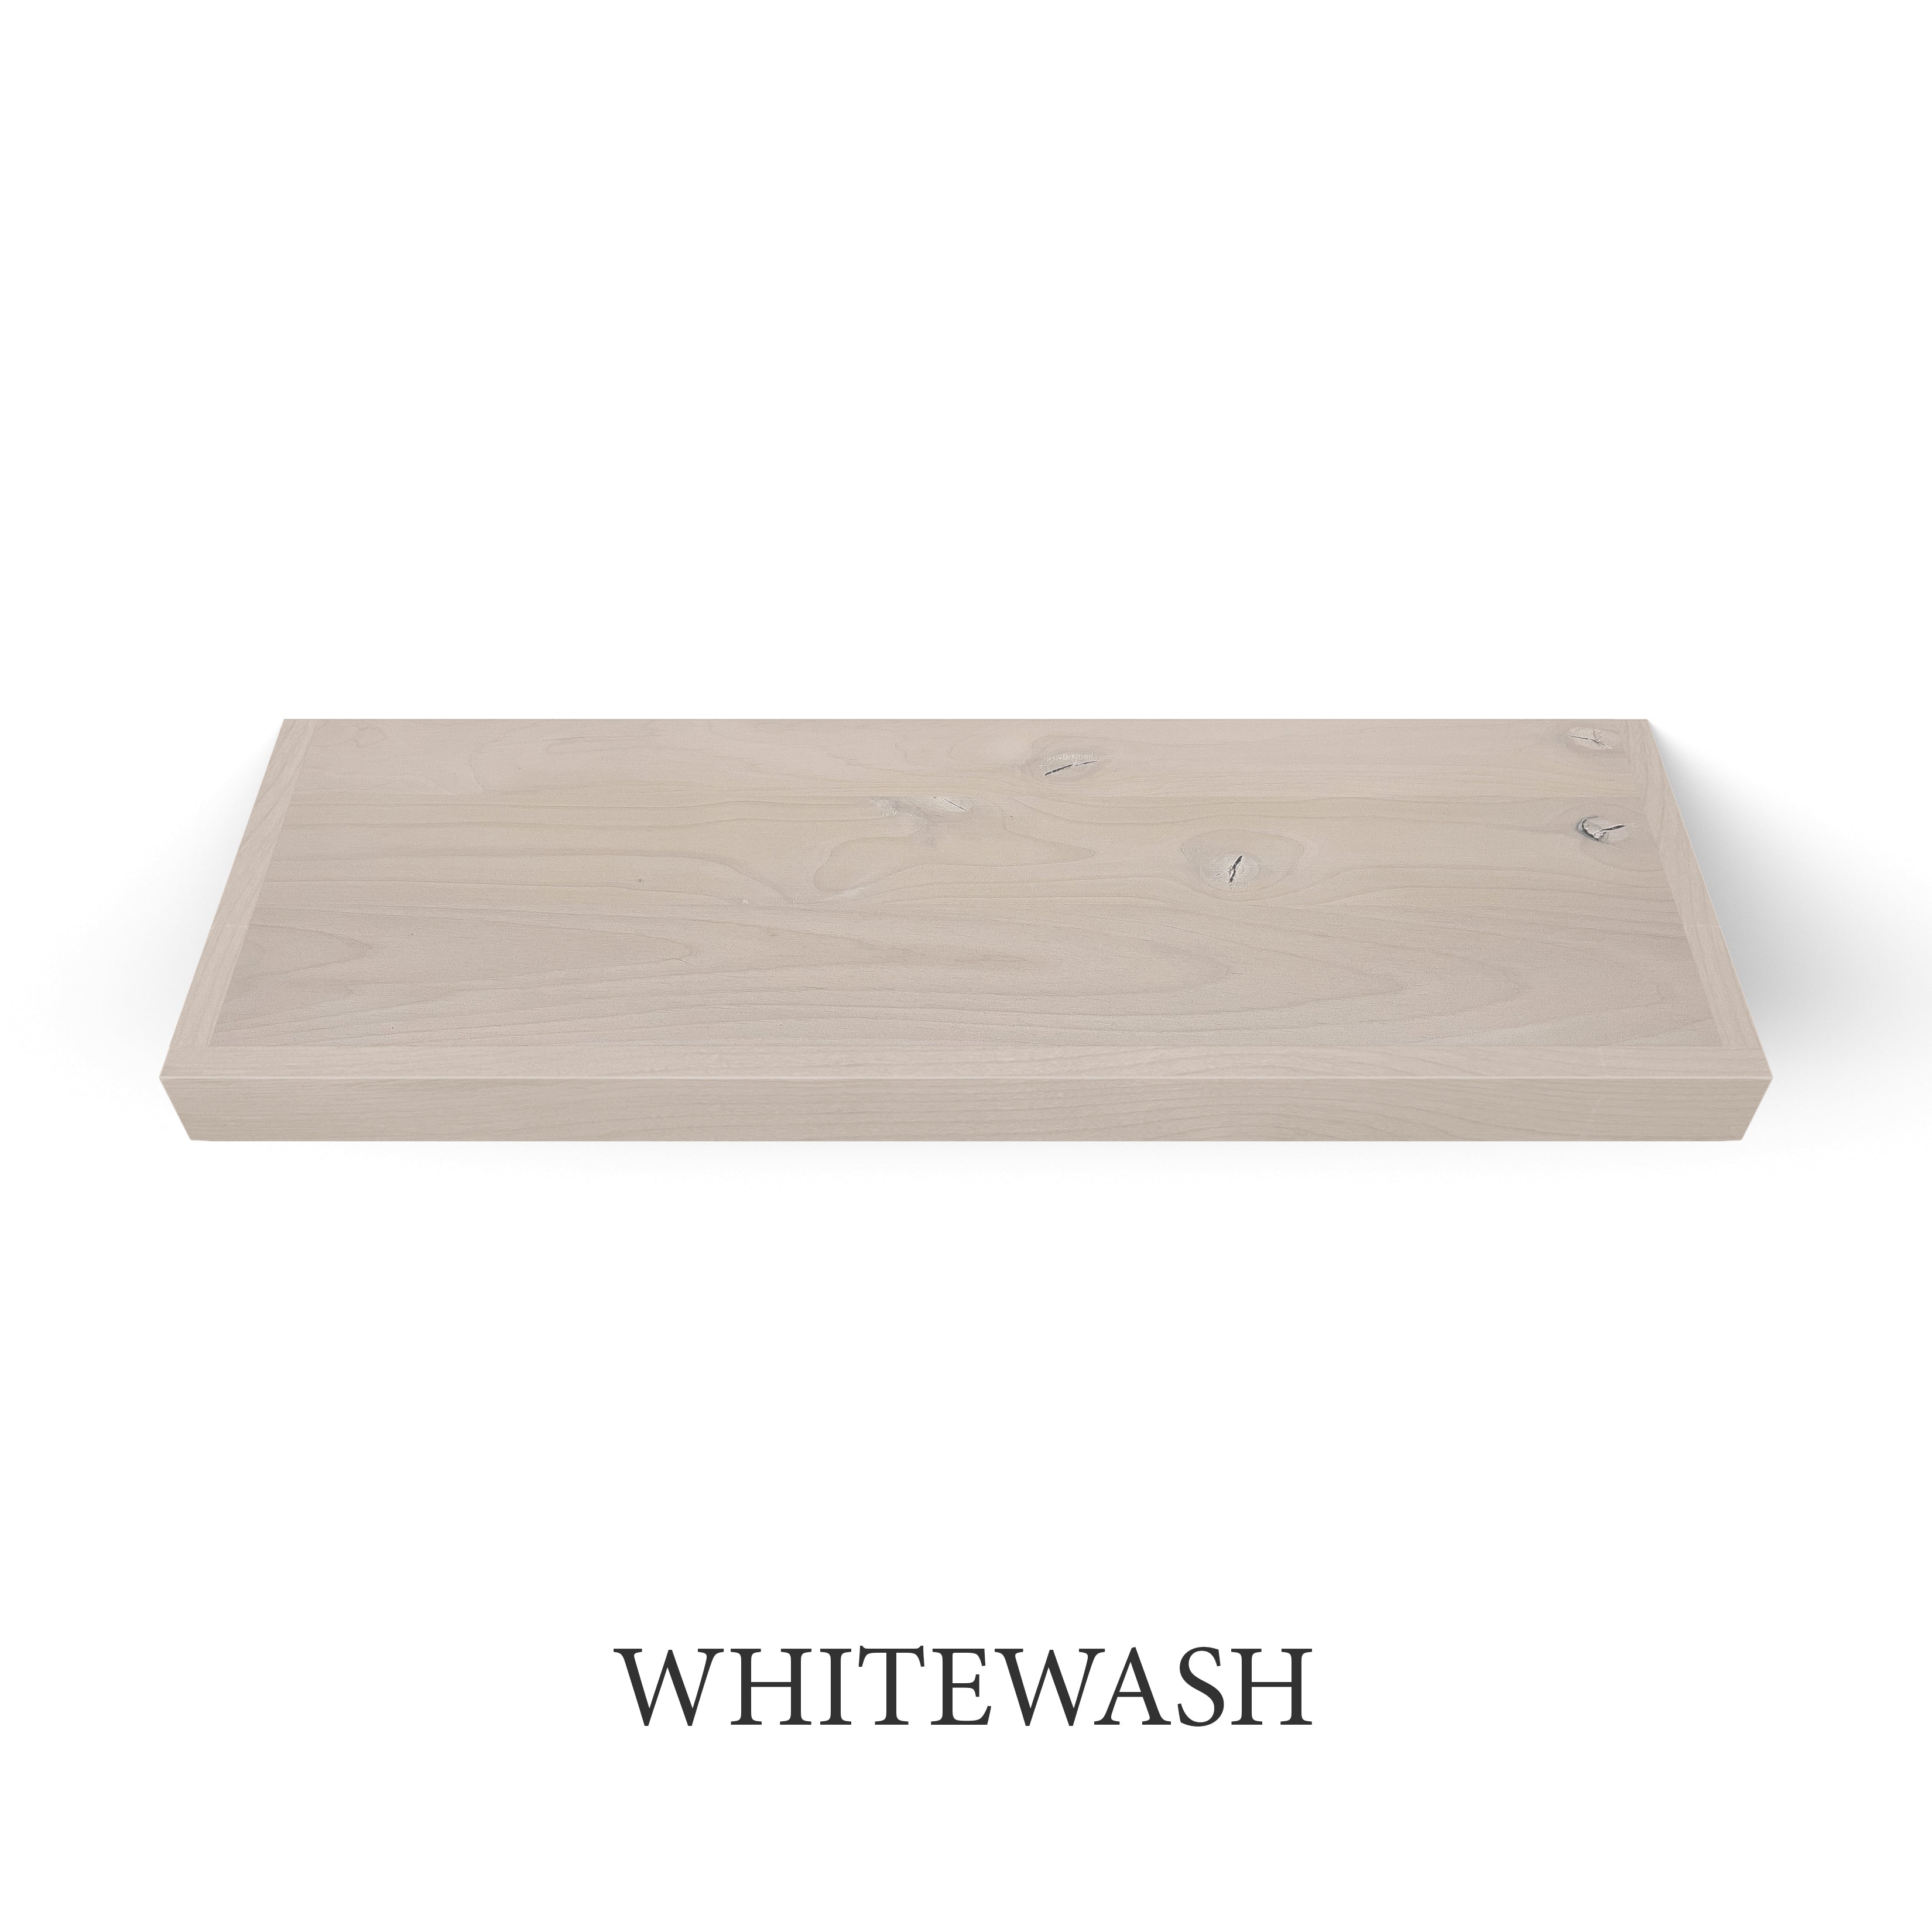 whitewash Rustic Alder 2 Inch Thick Floating Shelves